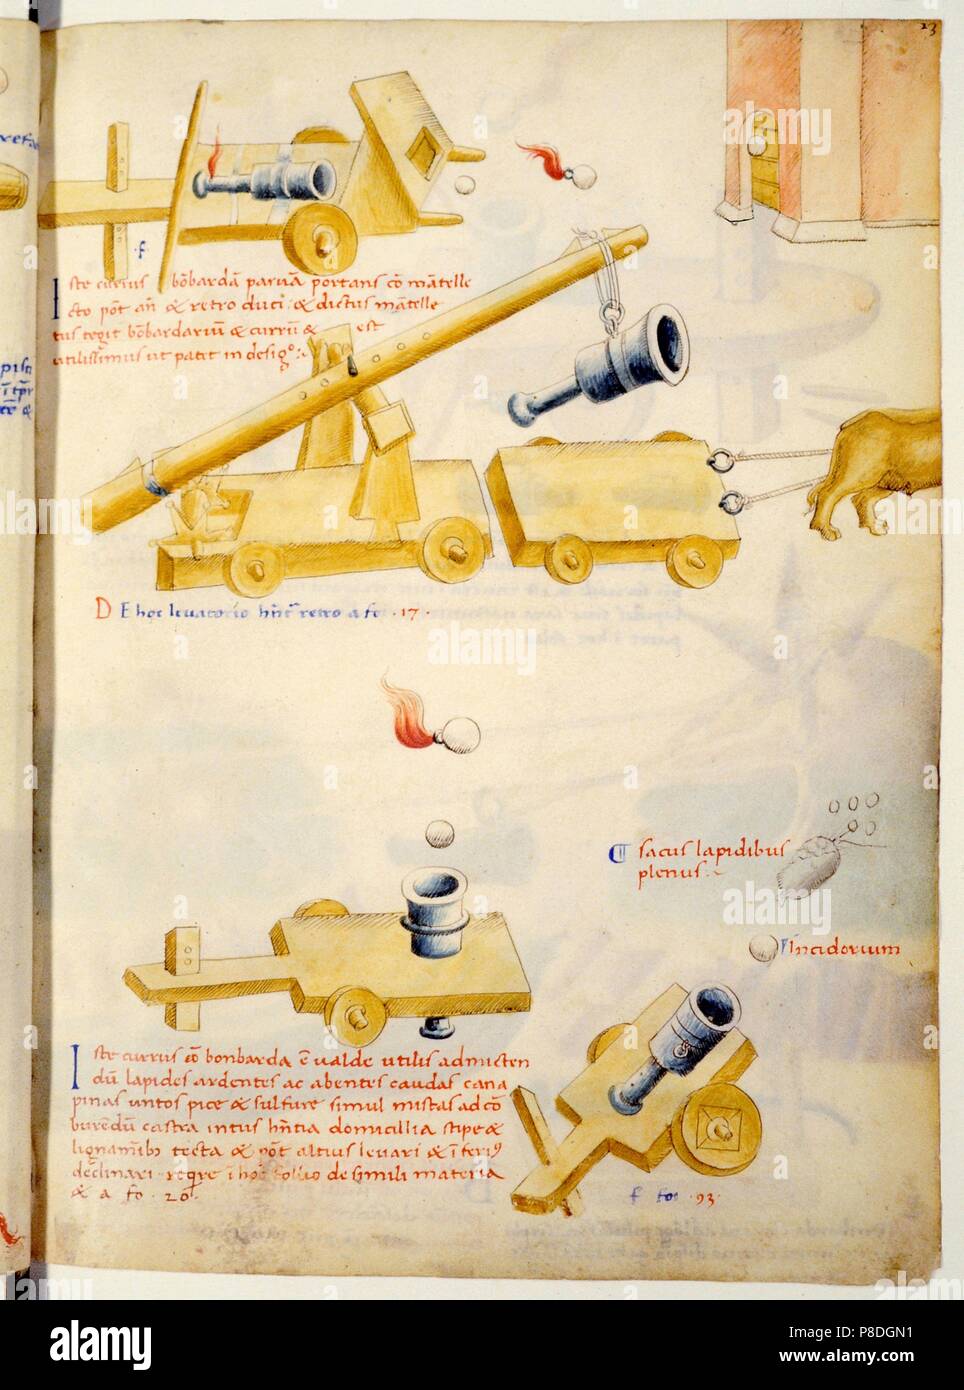 A firearm. Illustration from De rebus militaribus, De machinis by Mariano Taccola. Museum: BIBLIOTHEQUE NATIONALE DE FRANCE. Stock Photo